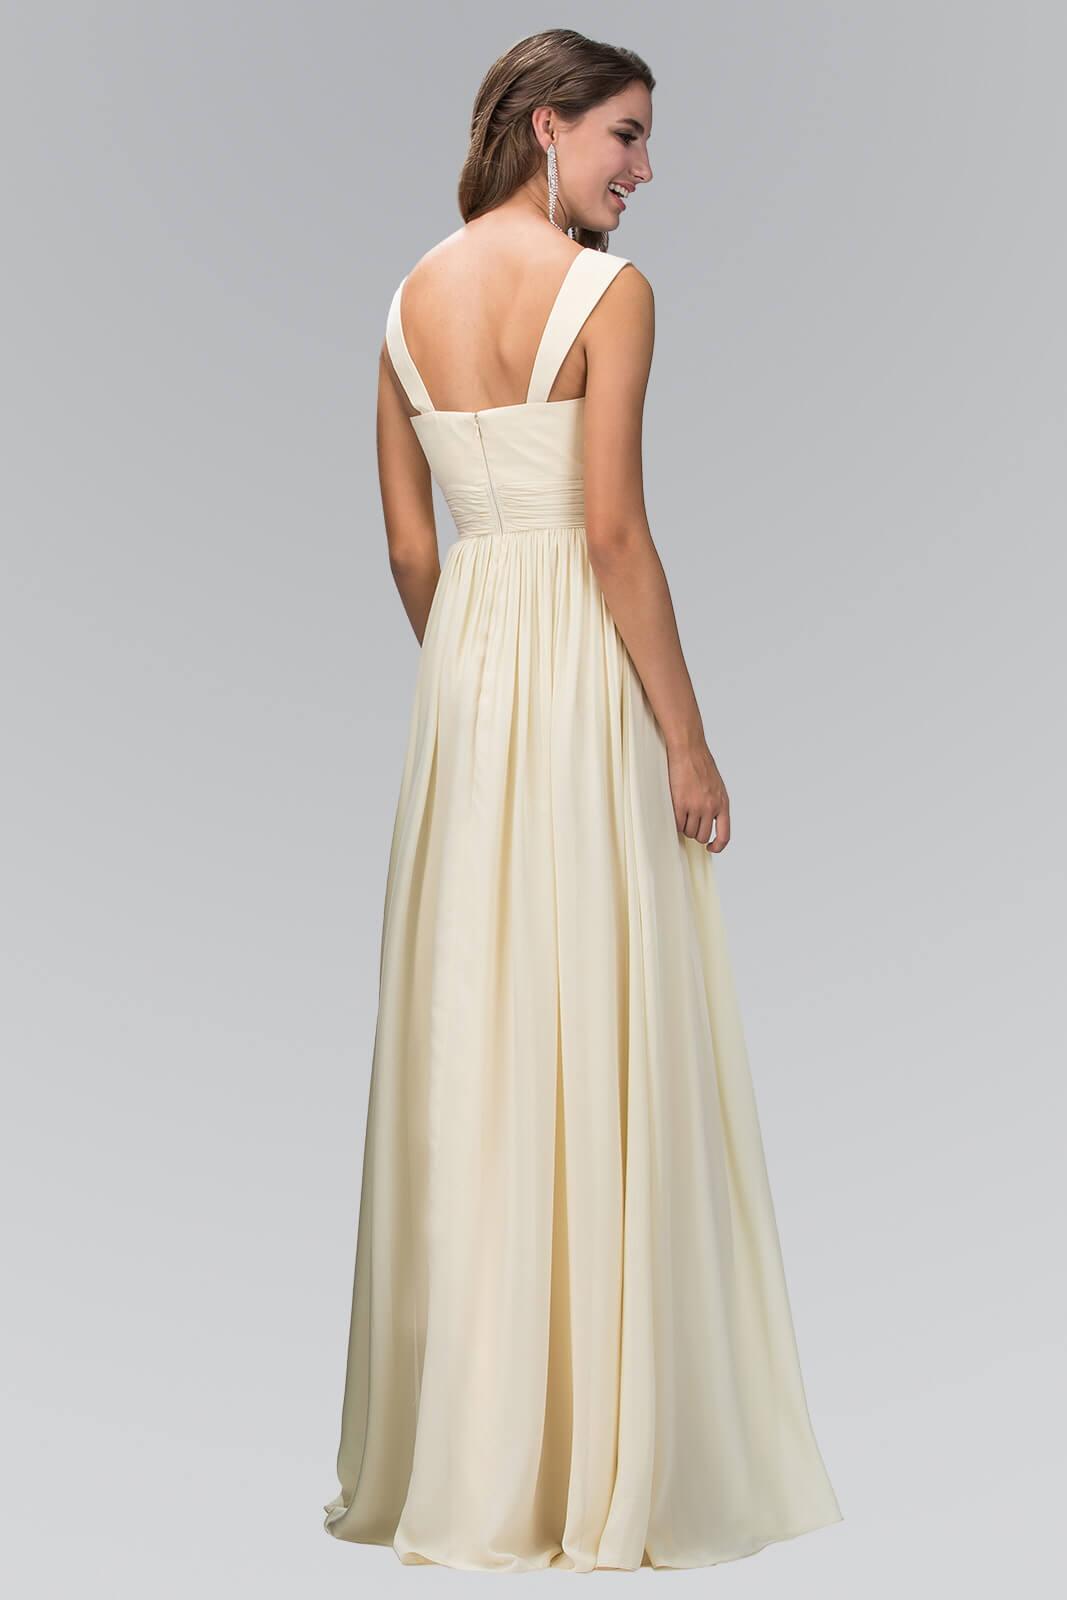 Sleeveless Chiffon Long Formal Dress - The Dress Outlet Elizabeth K